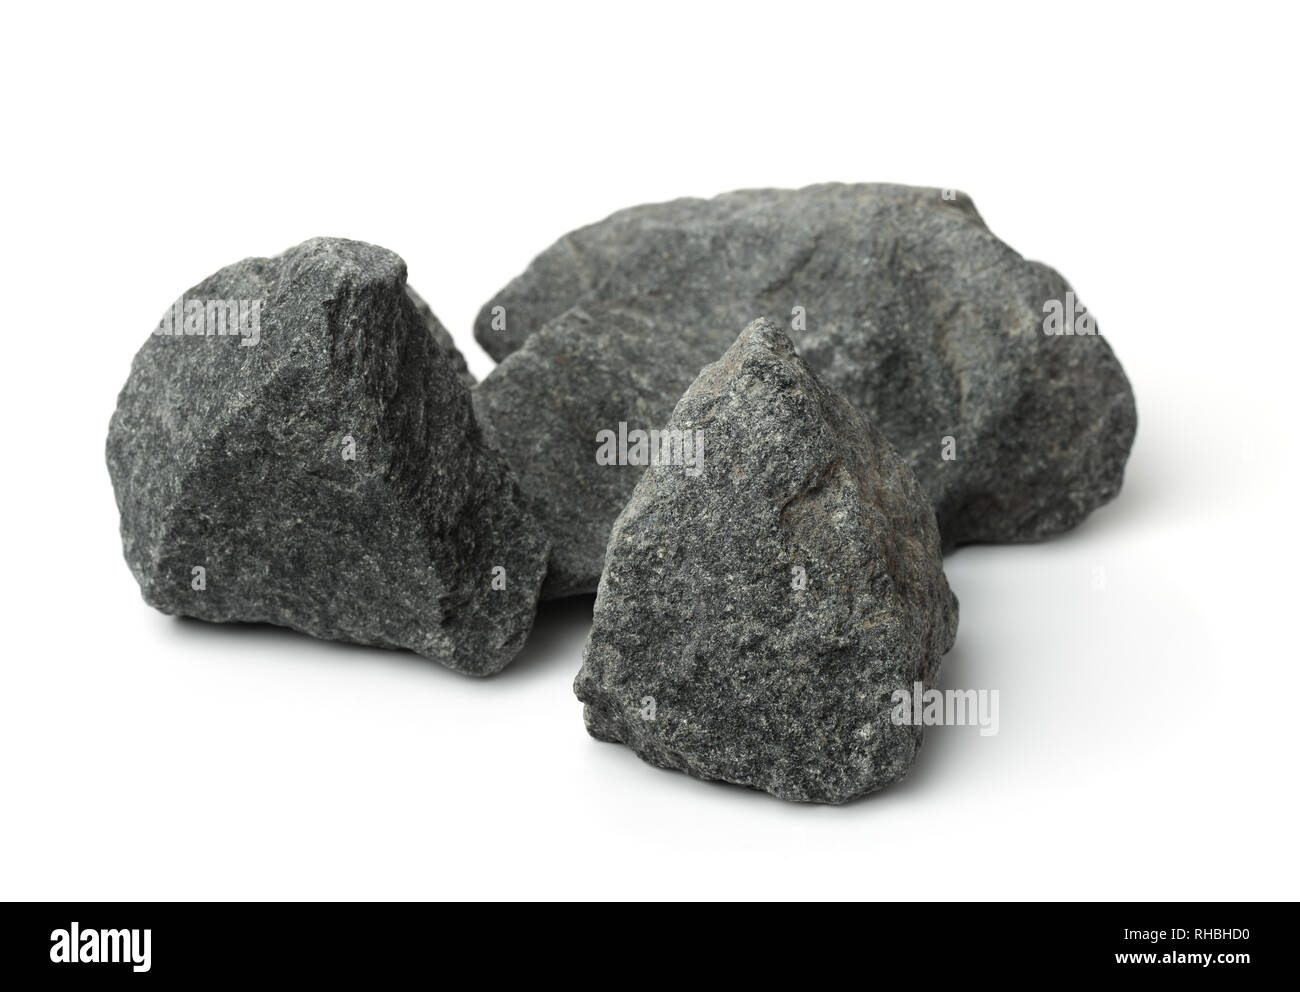 Crushed granite stones isolated on white Stock Photo